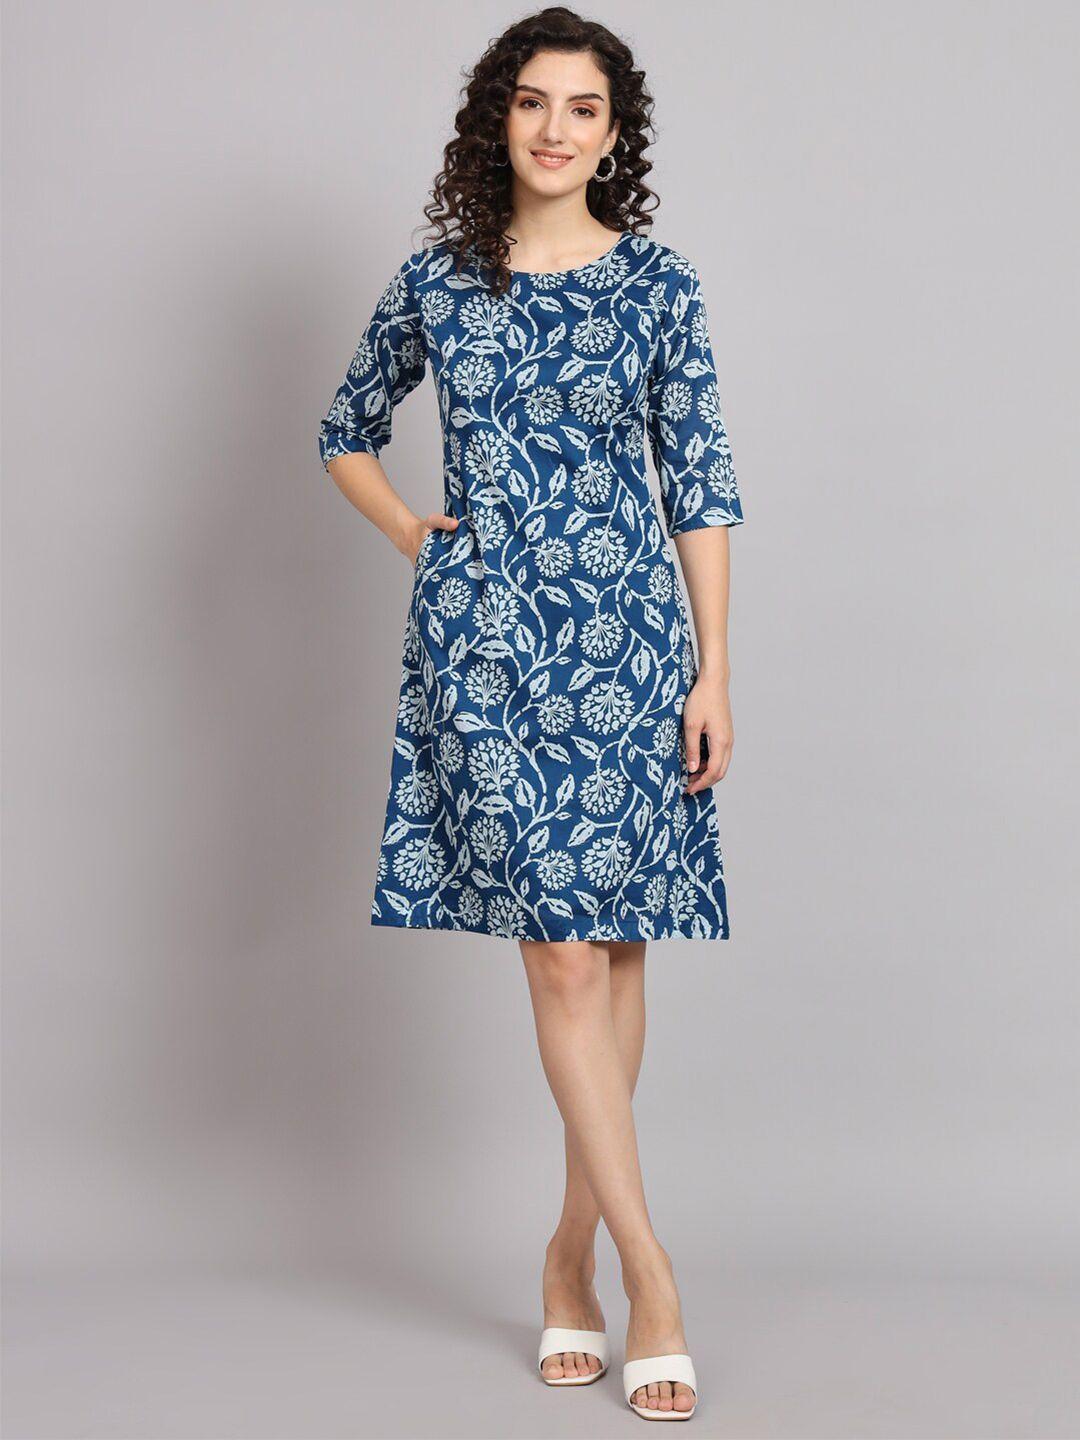 powersutra-blue-floral-print-a-line-dress